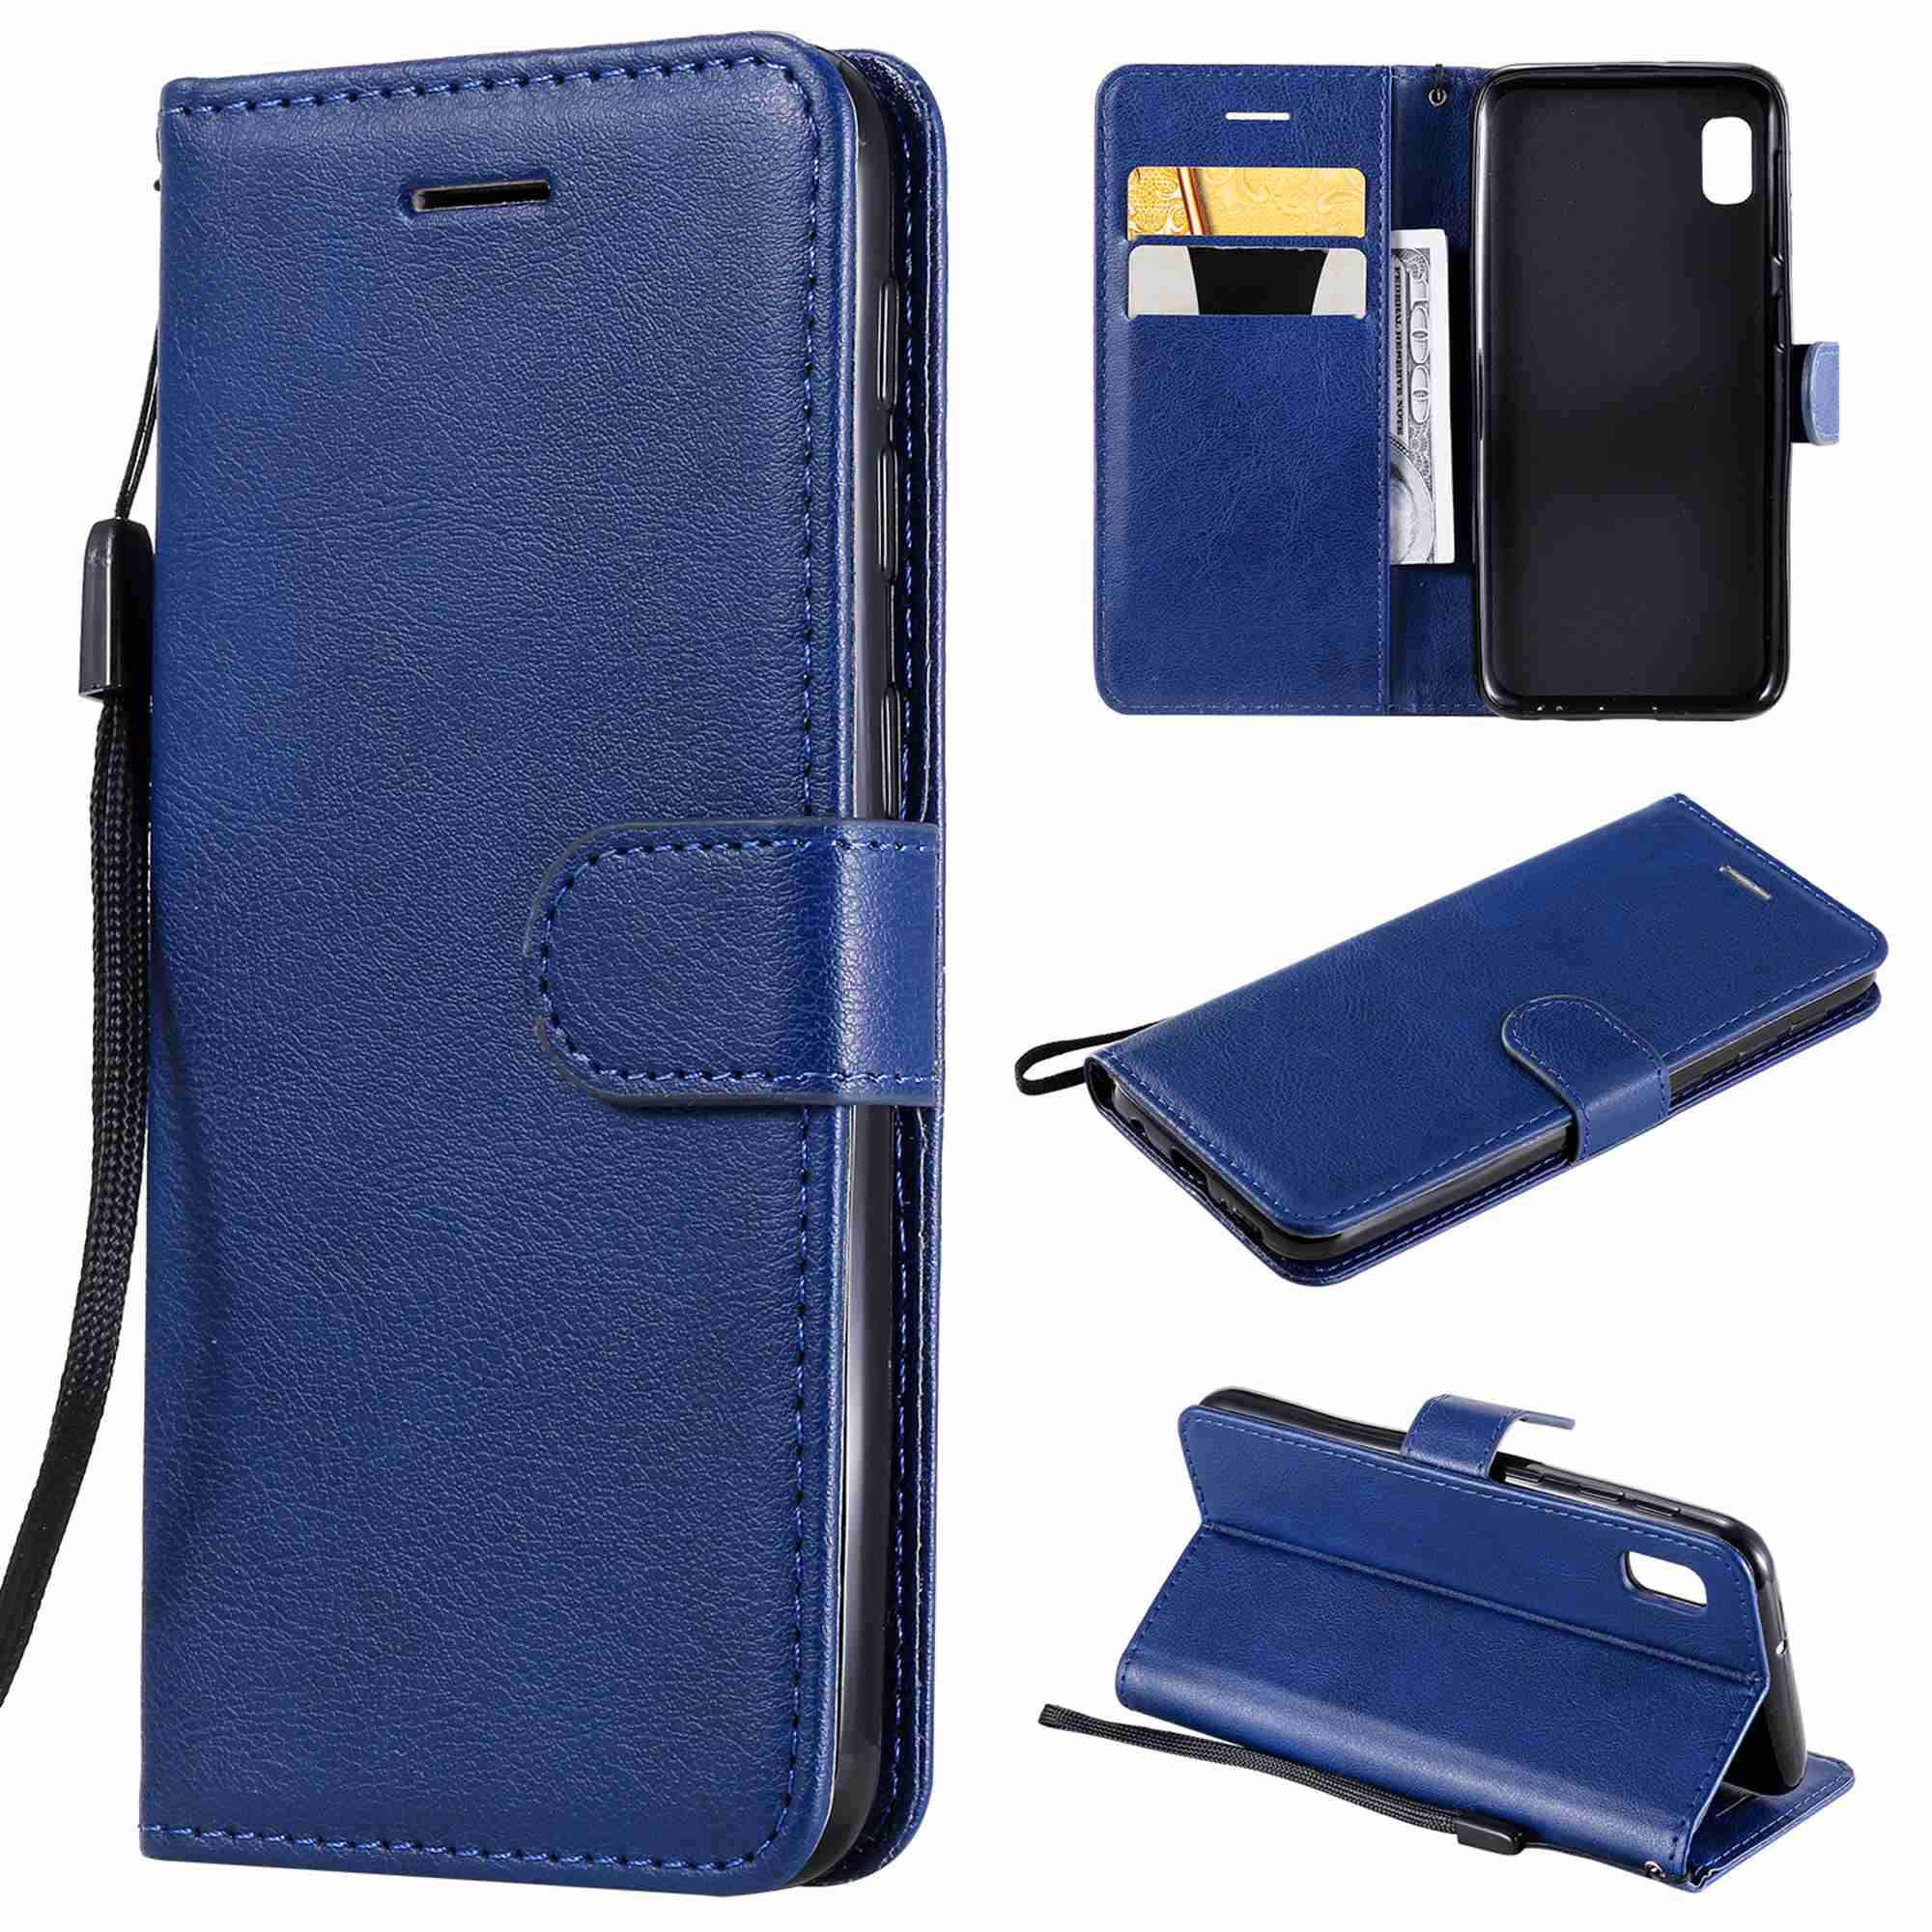 Dteck Galaxy A10E Wallet Case, Premium PU Leather Wallet Flip ...